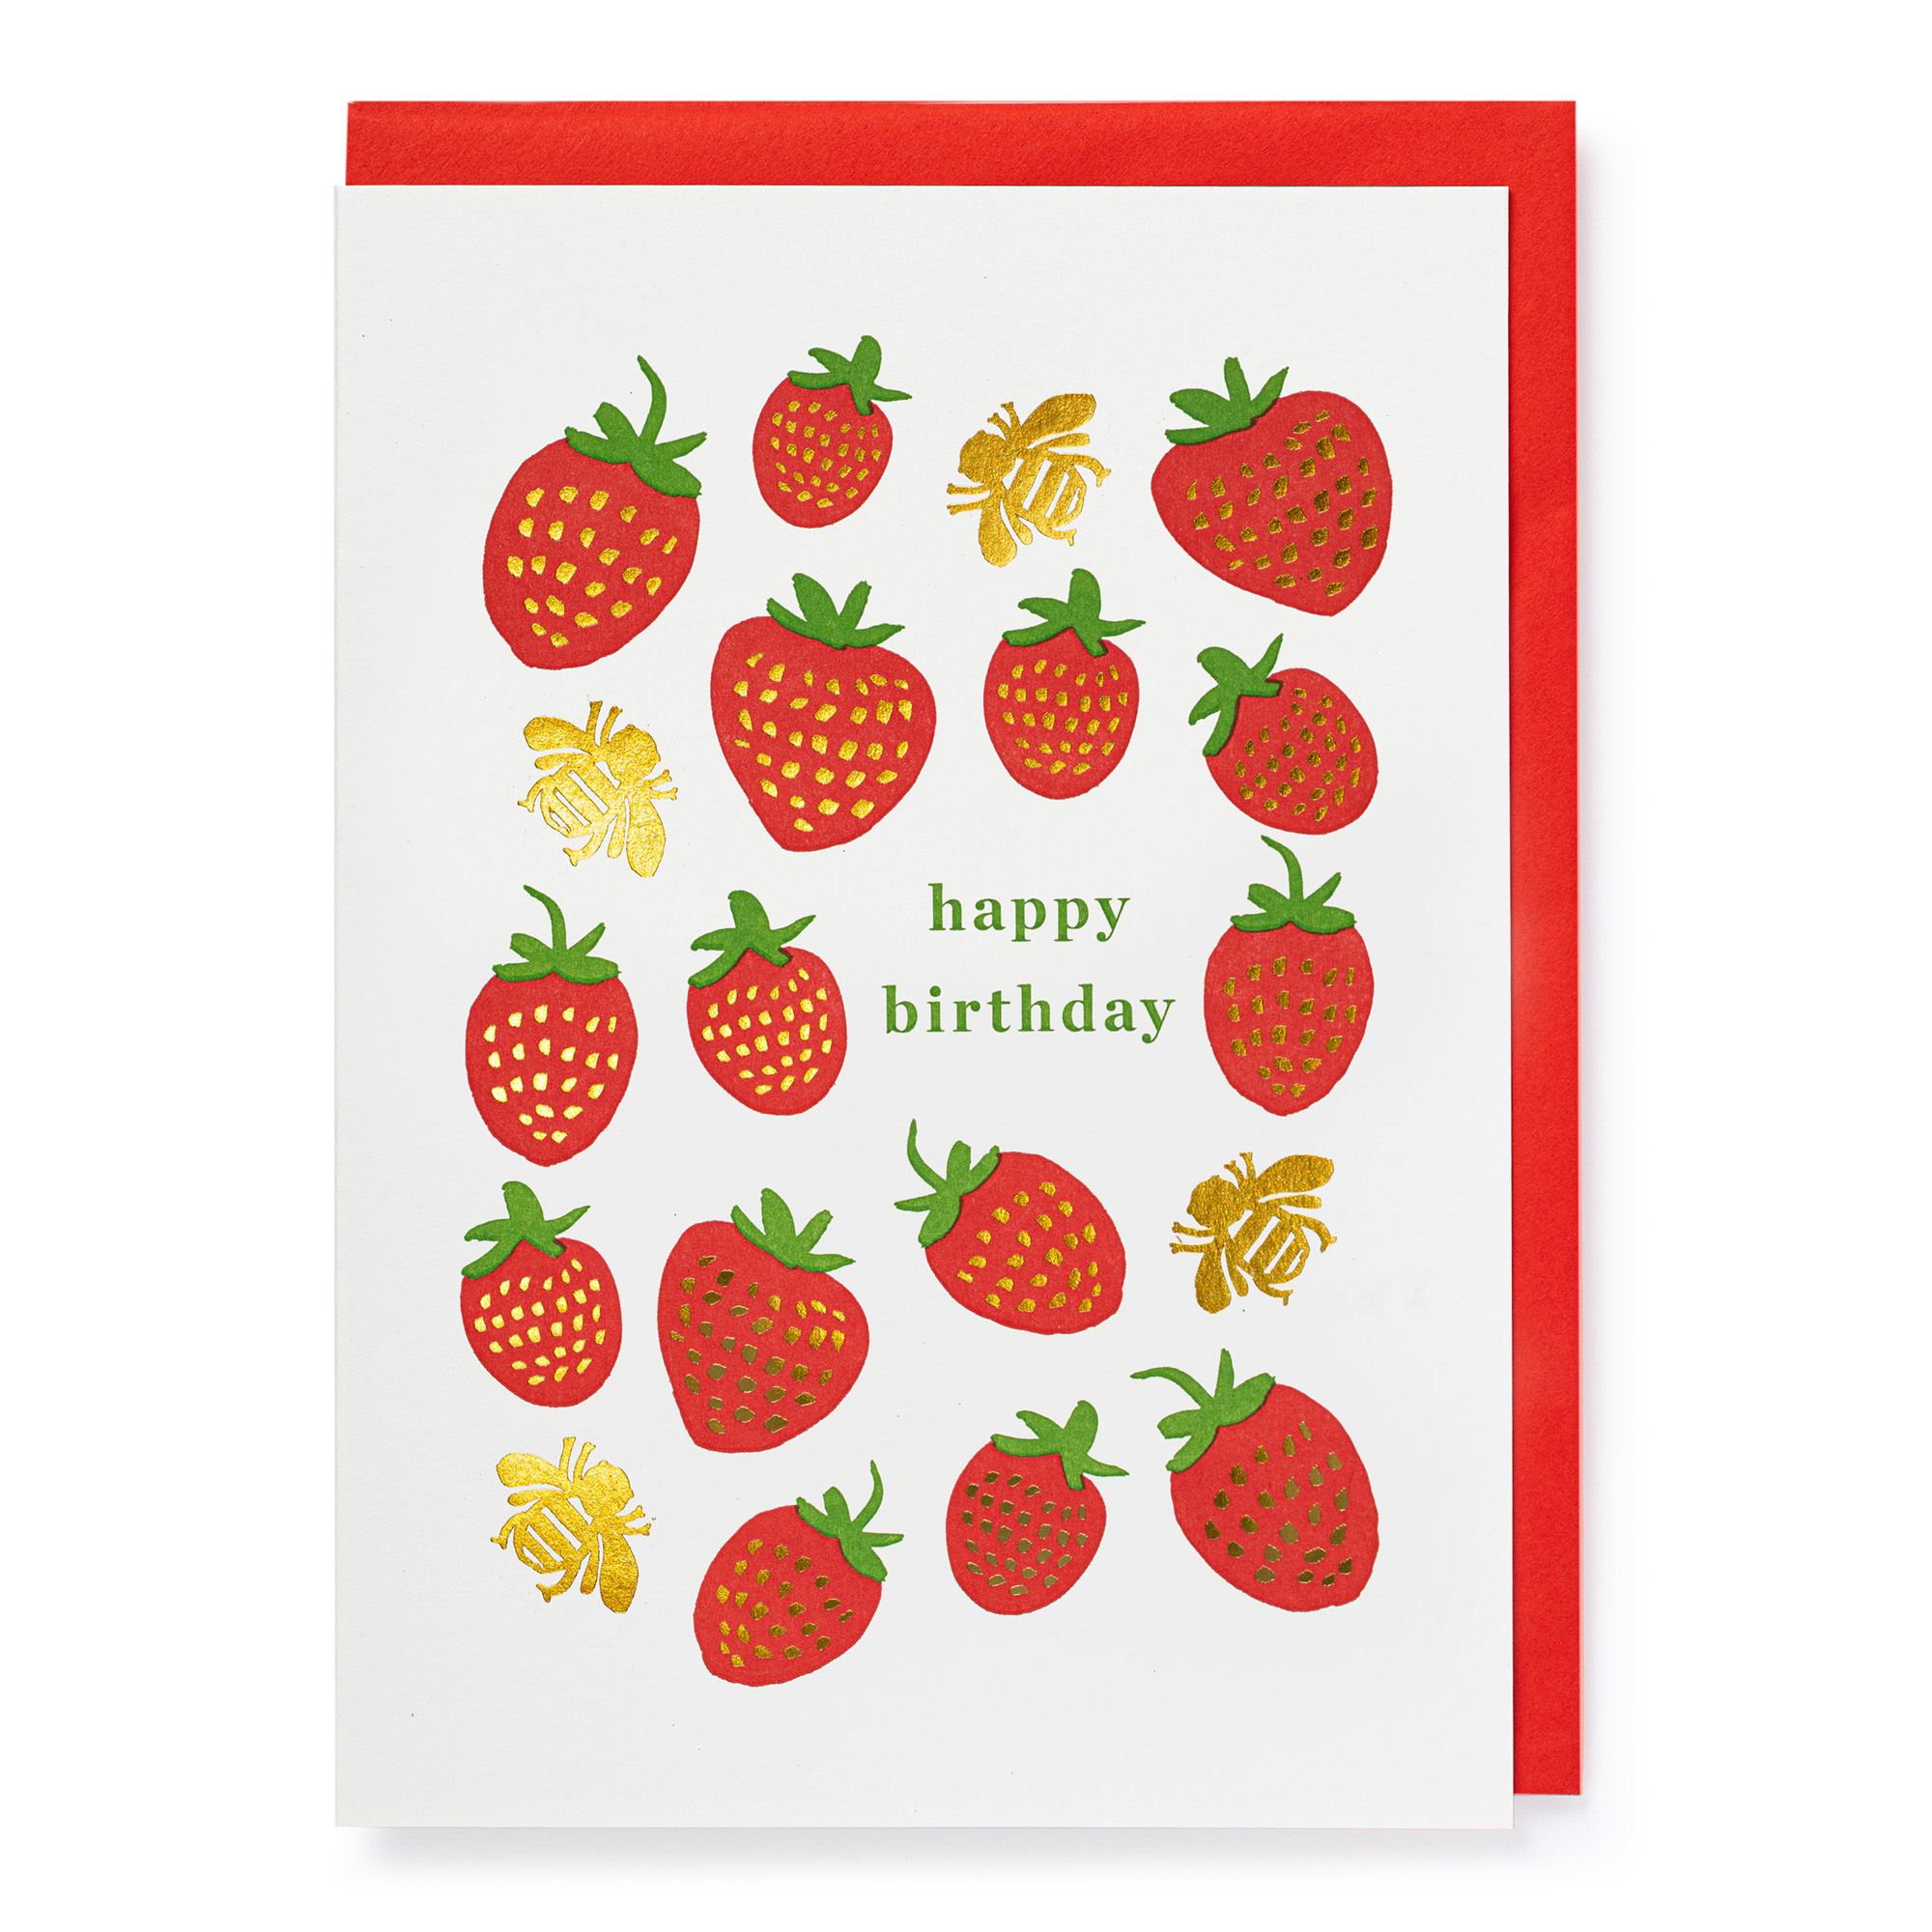 Strawberry Birthday - Letterpress Cards - J.Falkner - from Archivist Gallery 